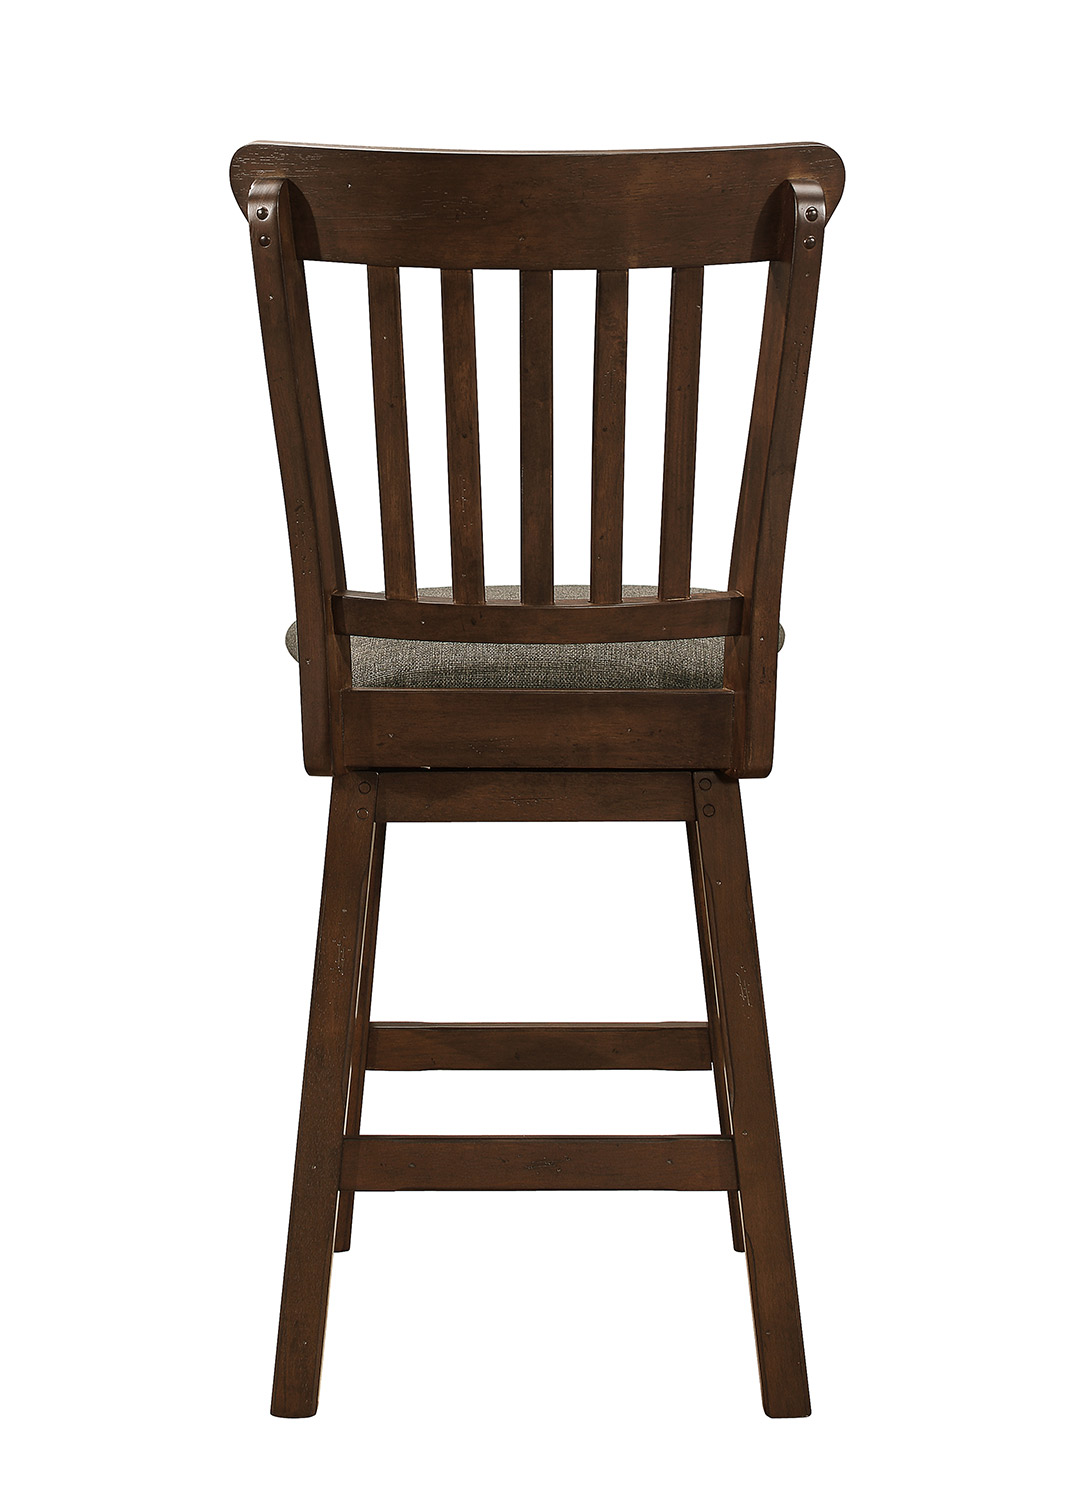 Homelegance Schleiger Swivel Counter Height Chair - Dark Brown